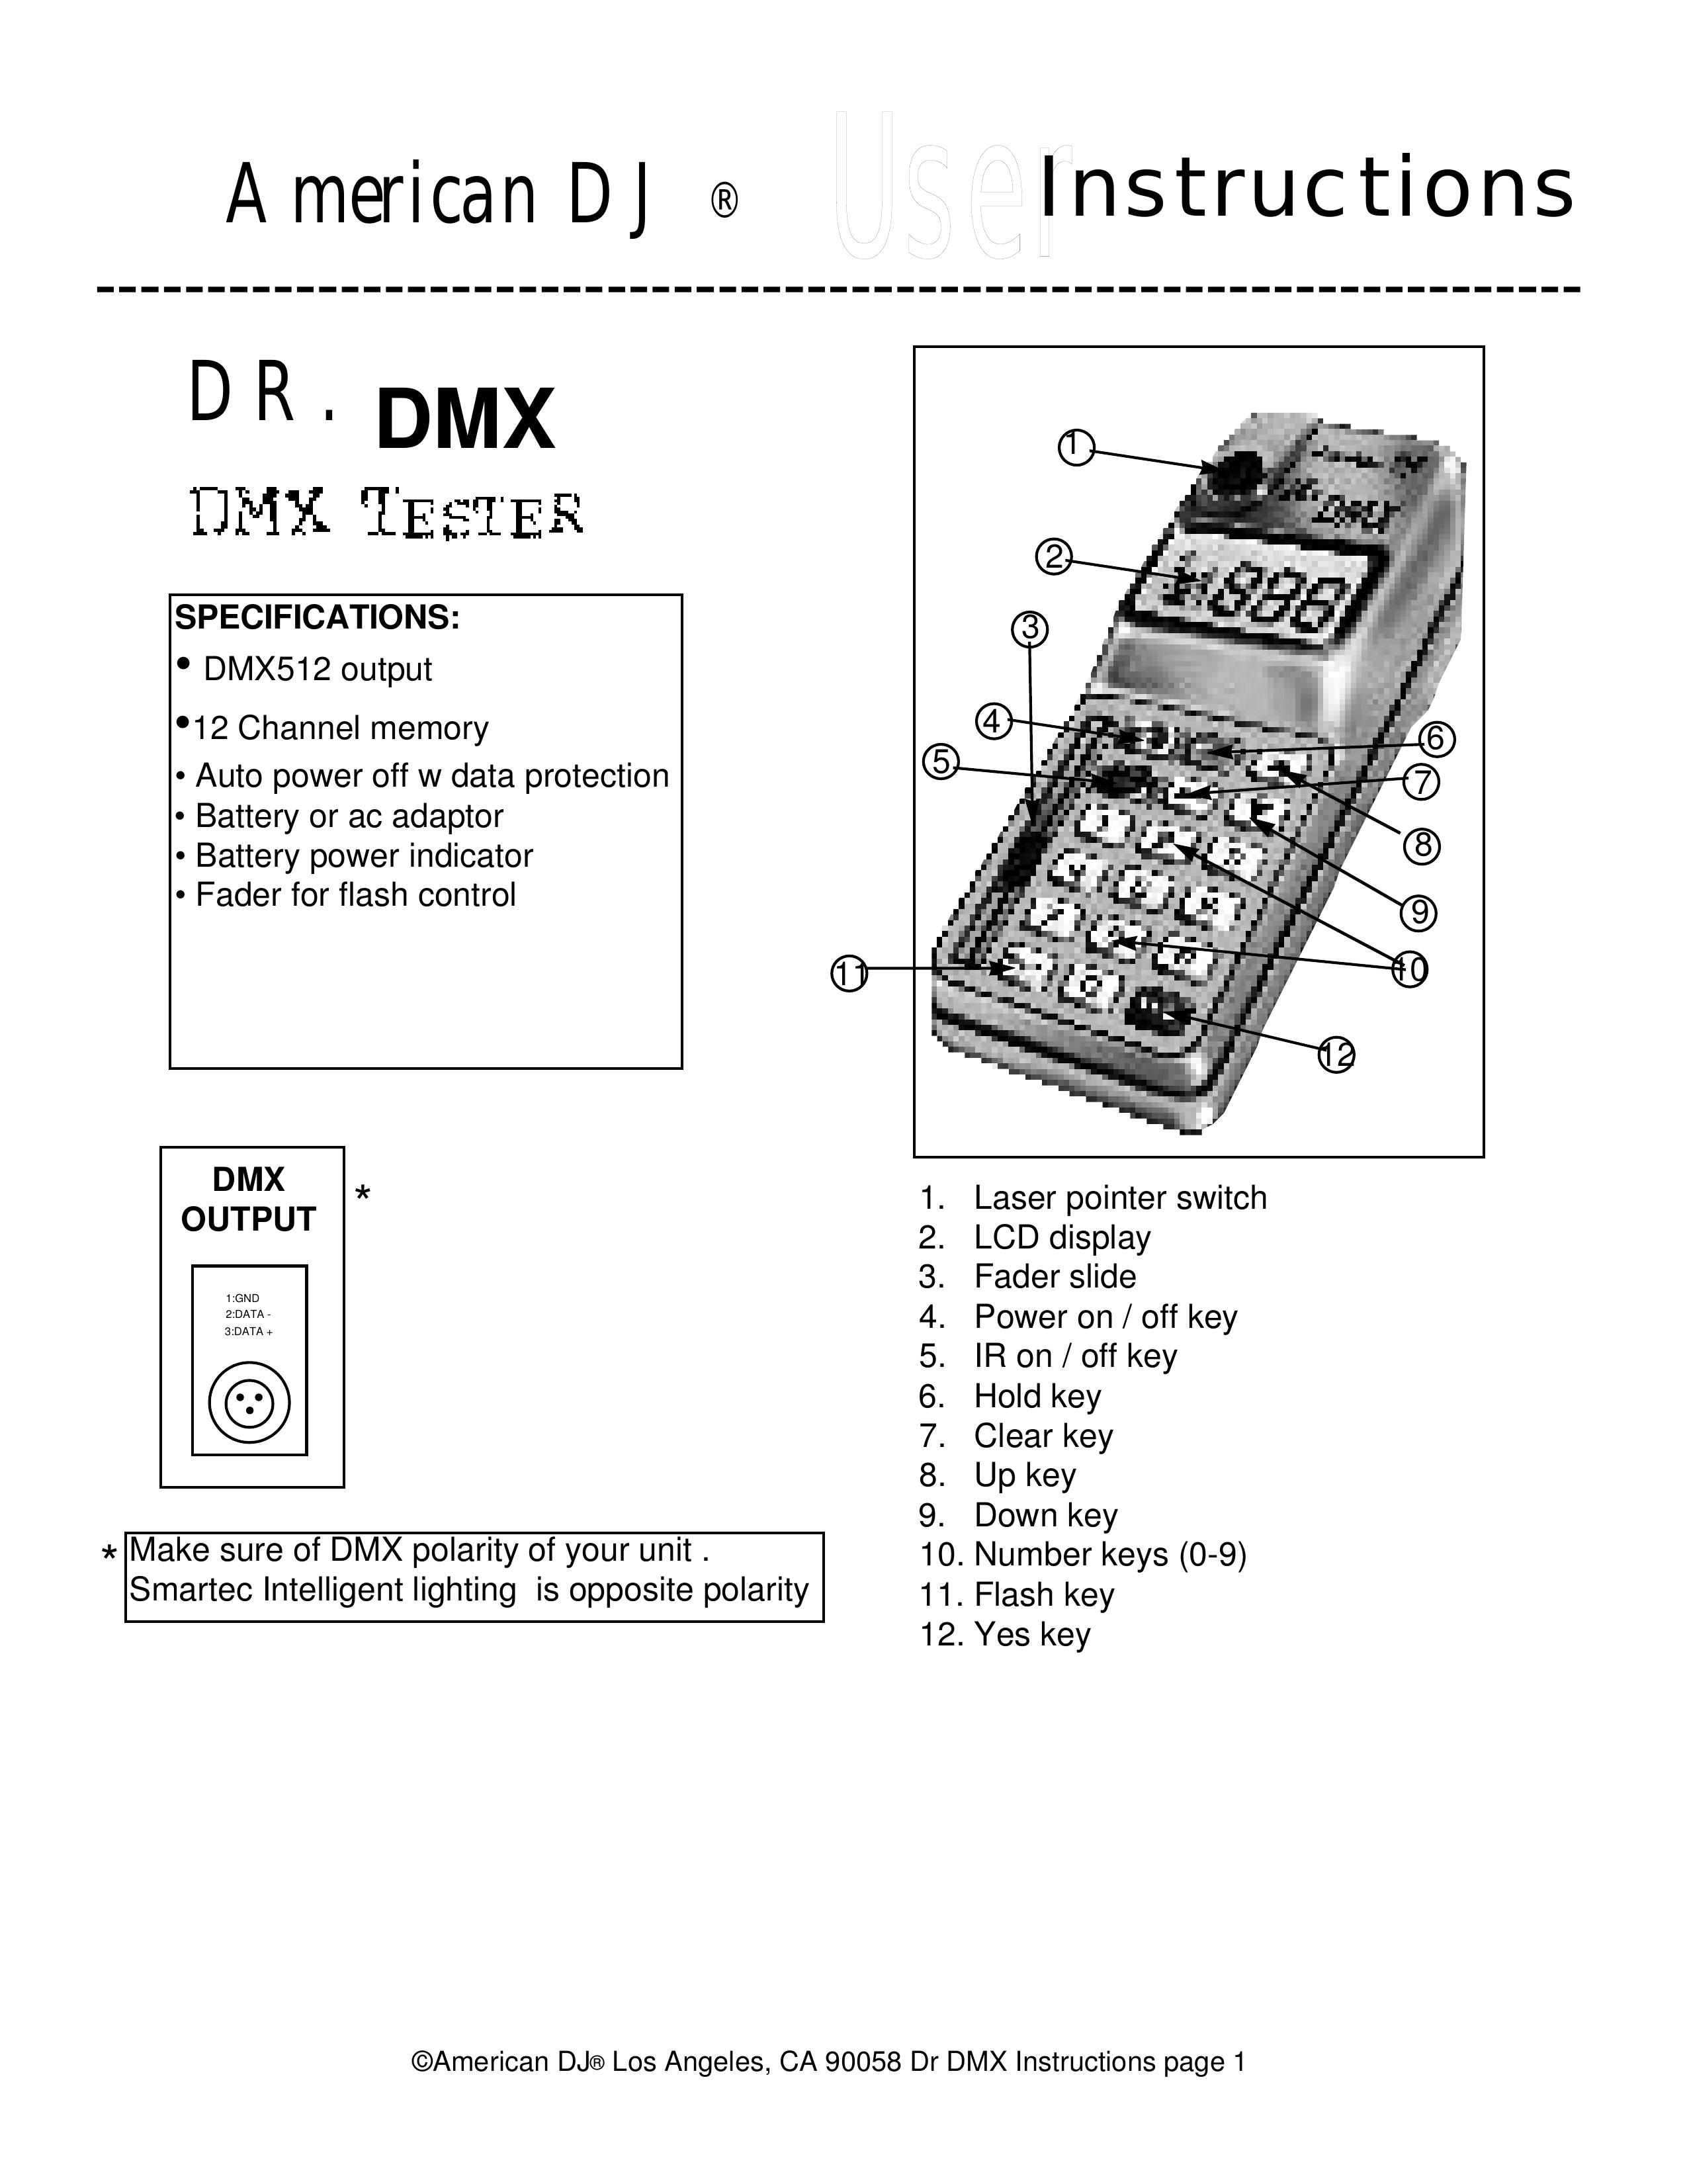 American DJ Dr. DMX DJ Equipment User Manual